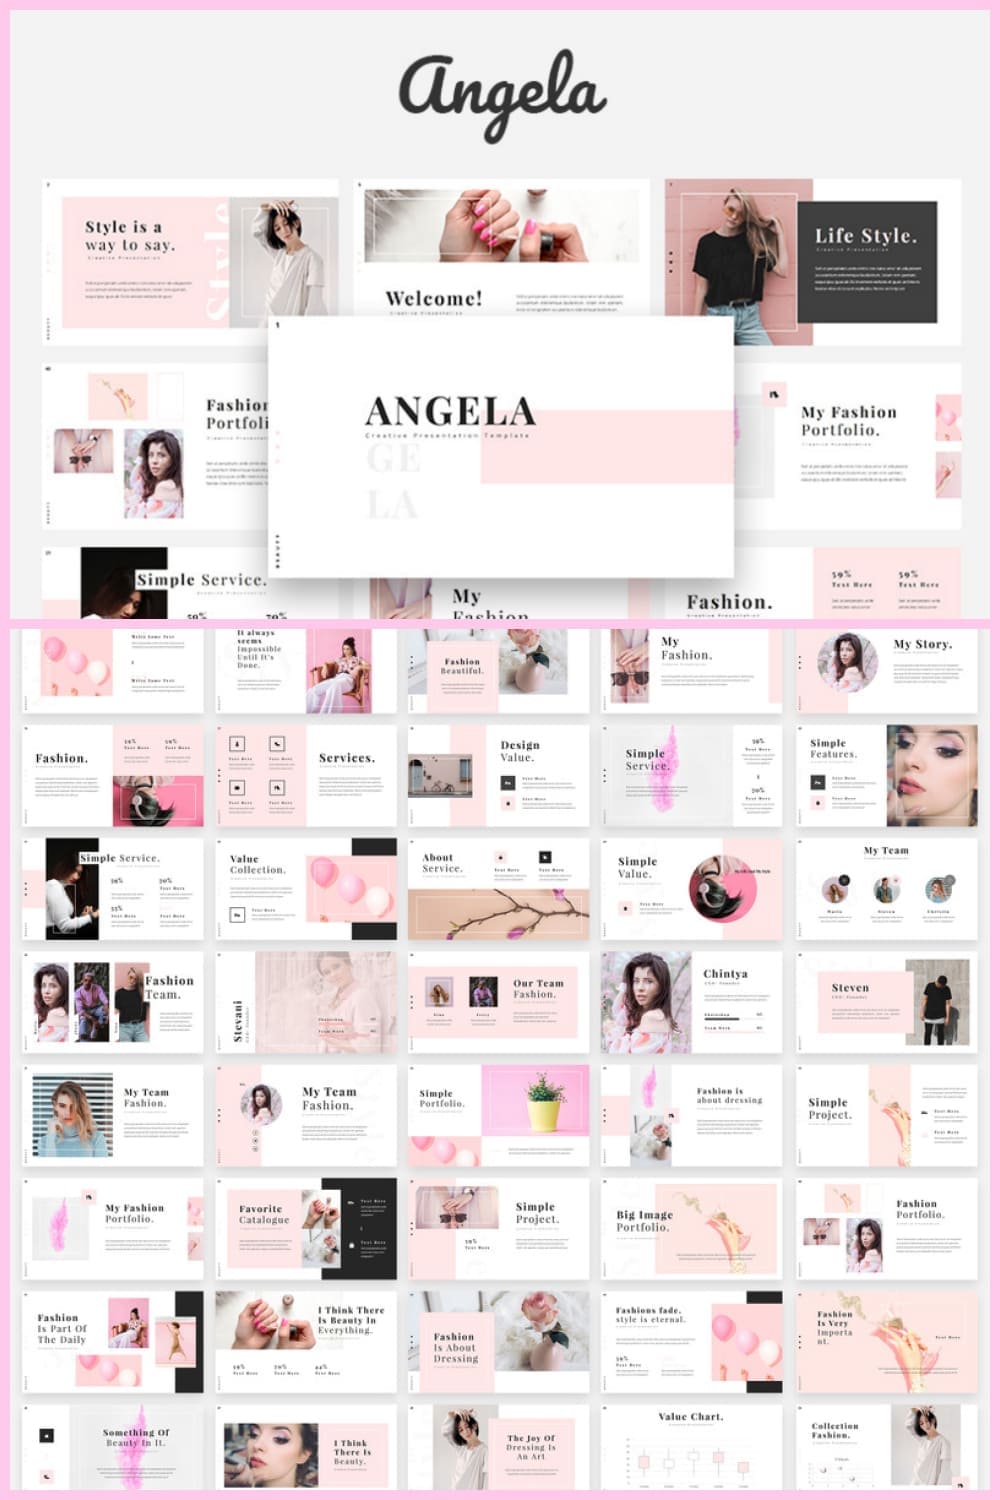 Angela PowerPoint Presentation Collage image.